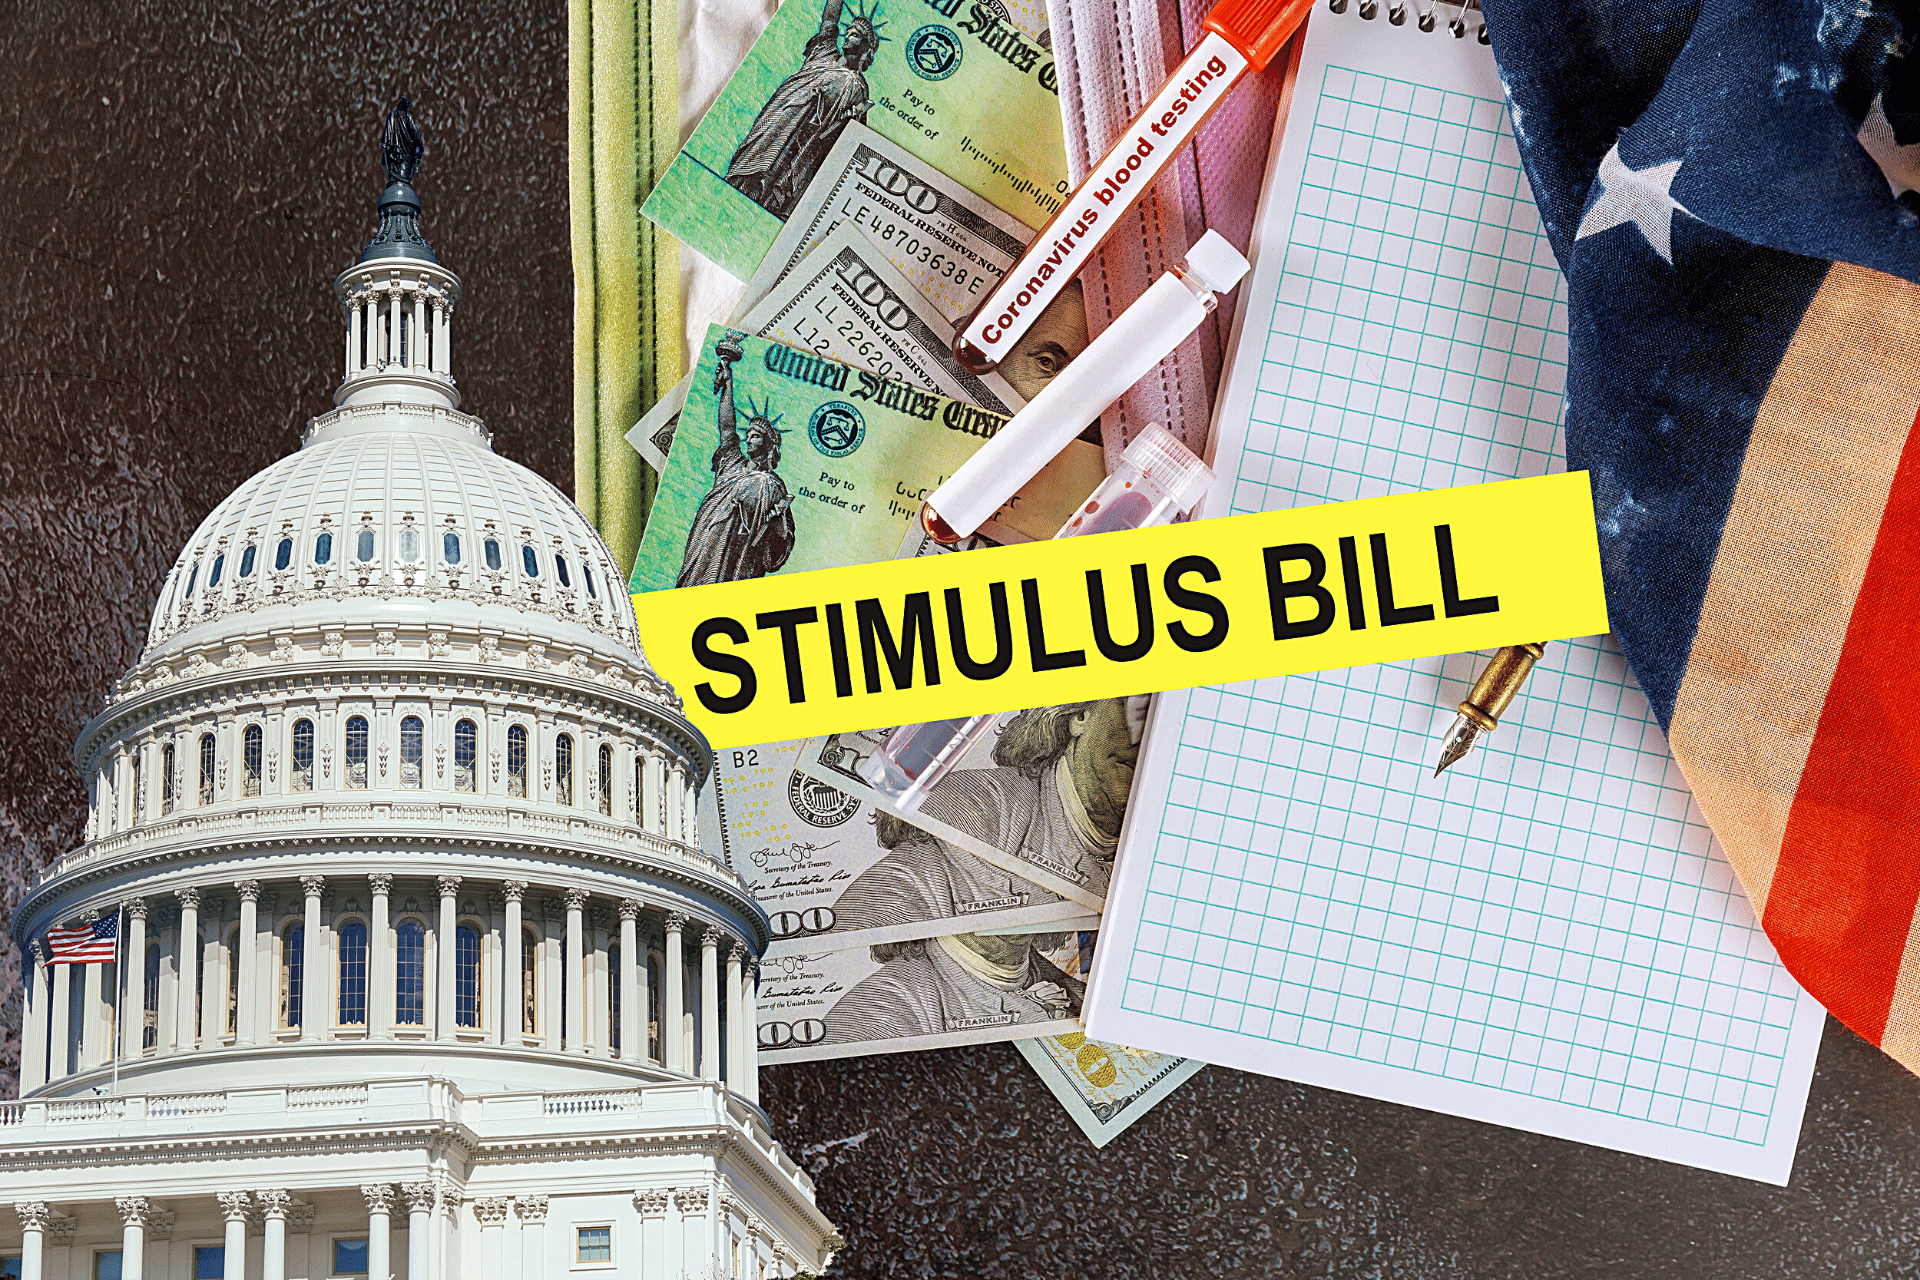 Federal reserve building. American flag. Notepad. US dollar bills. Text stating "STIMULUS BILL."